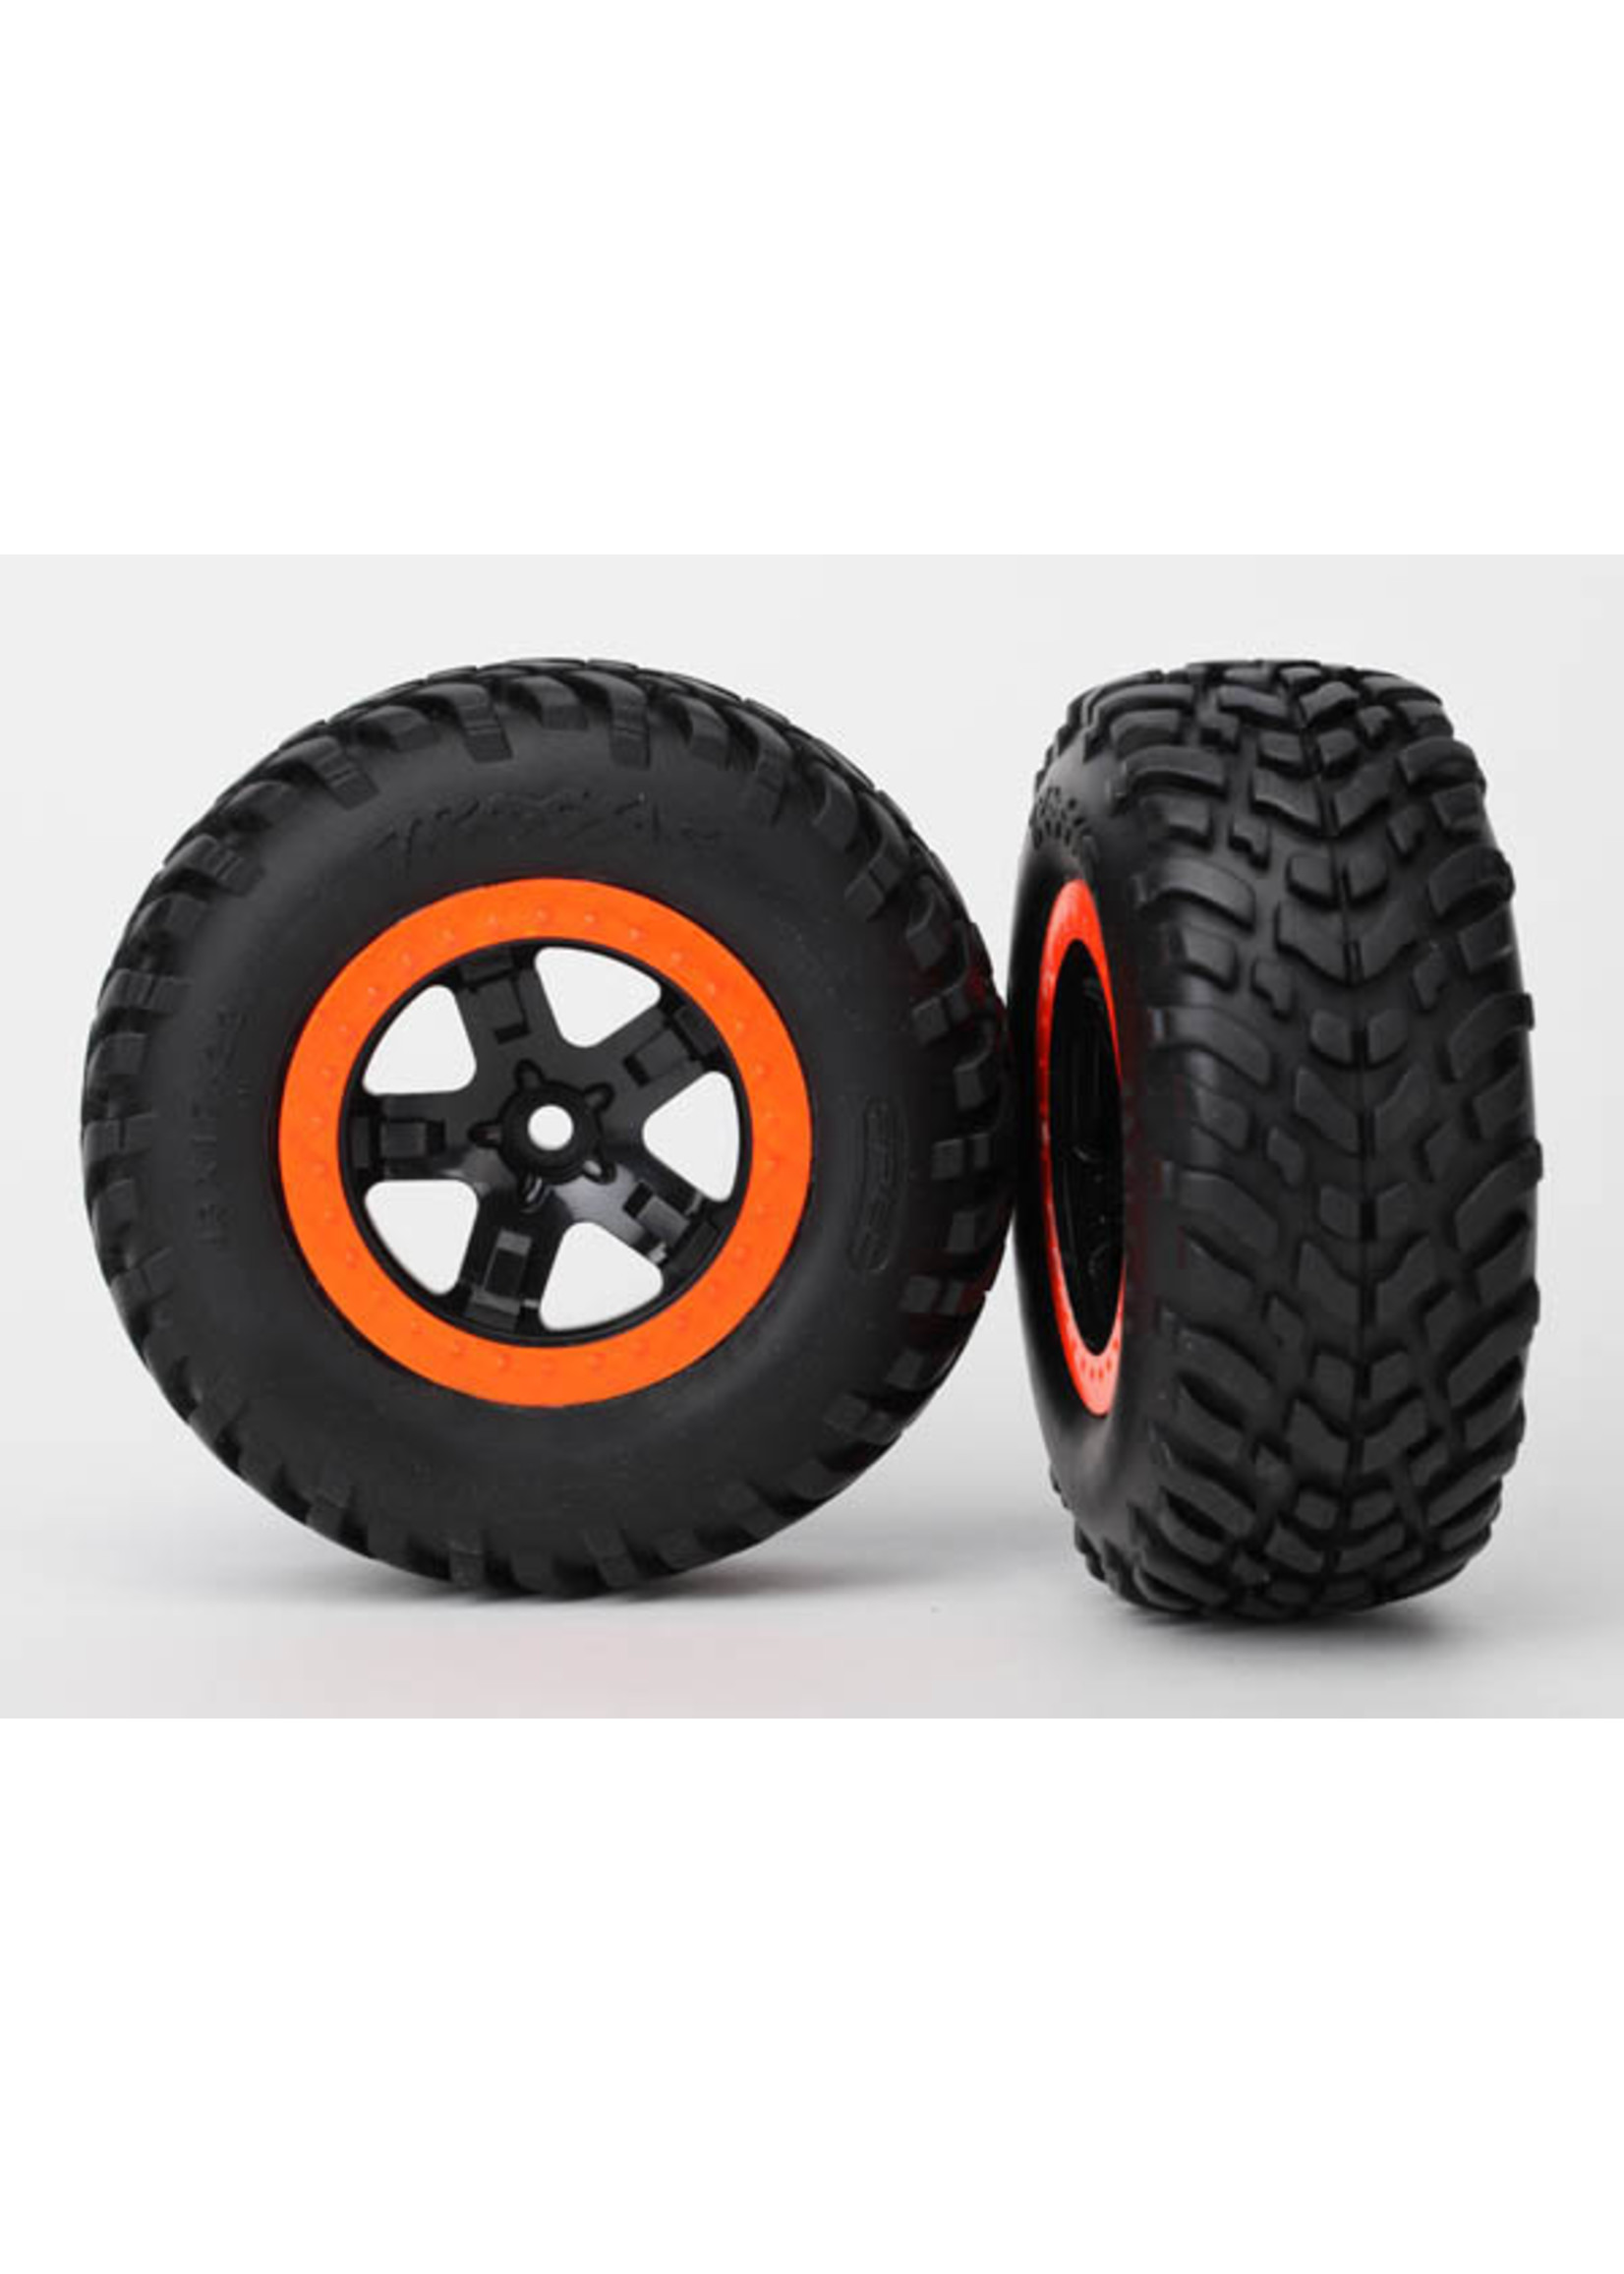 Traxxas 5863 - SCT Black, Orange Beadlock Wheels / SCT Off-road Racing Tires